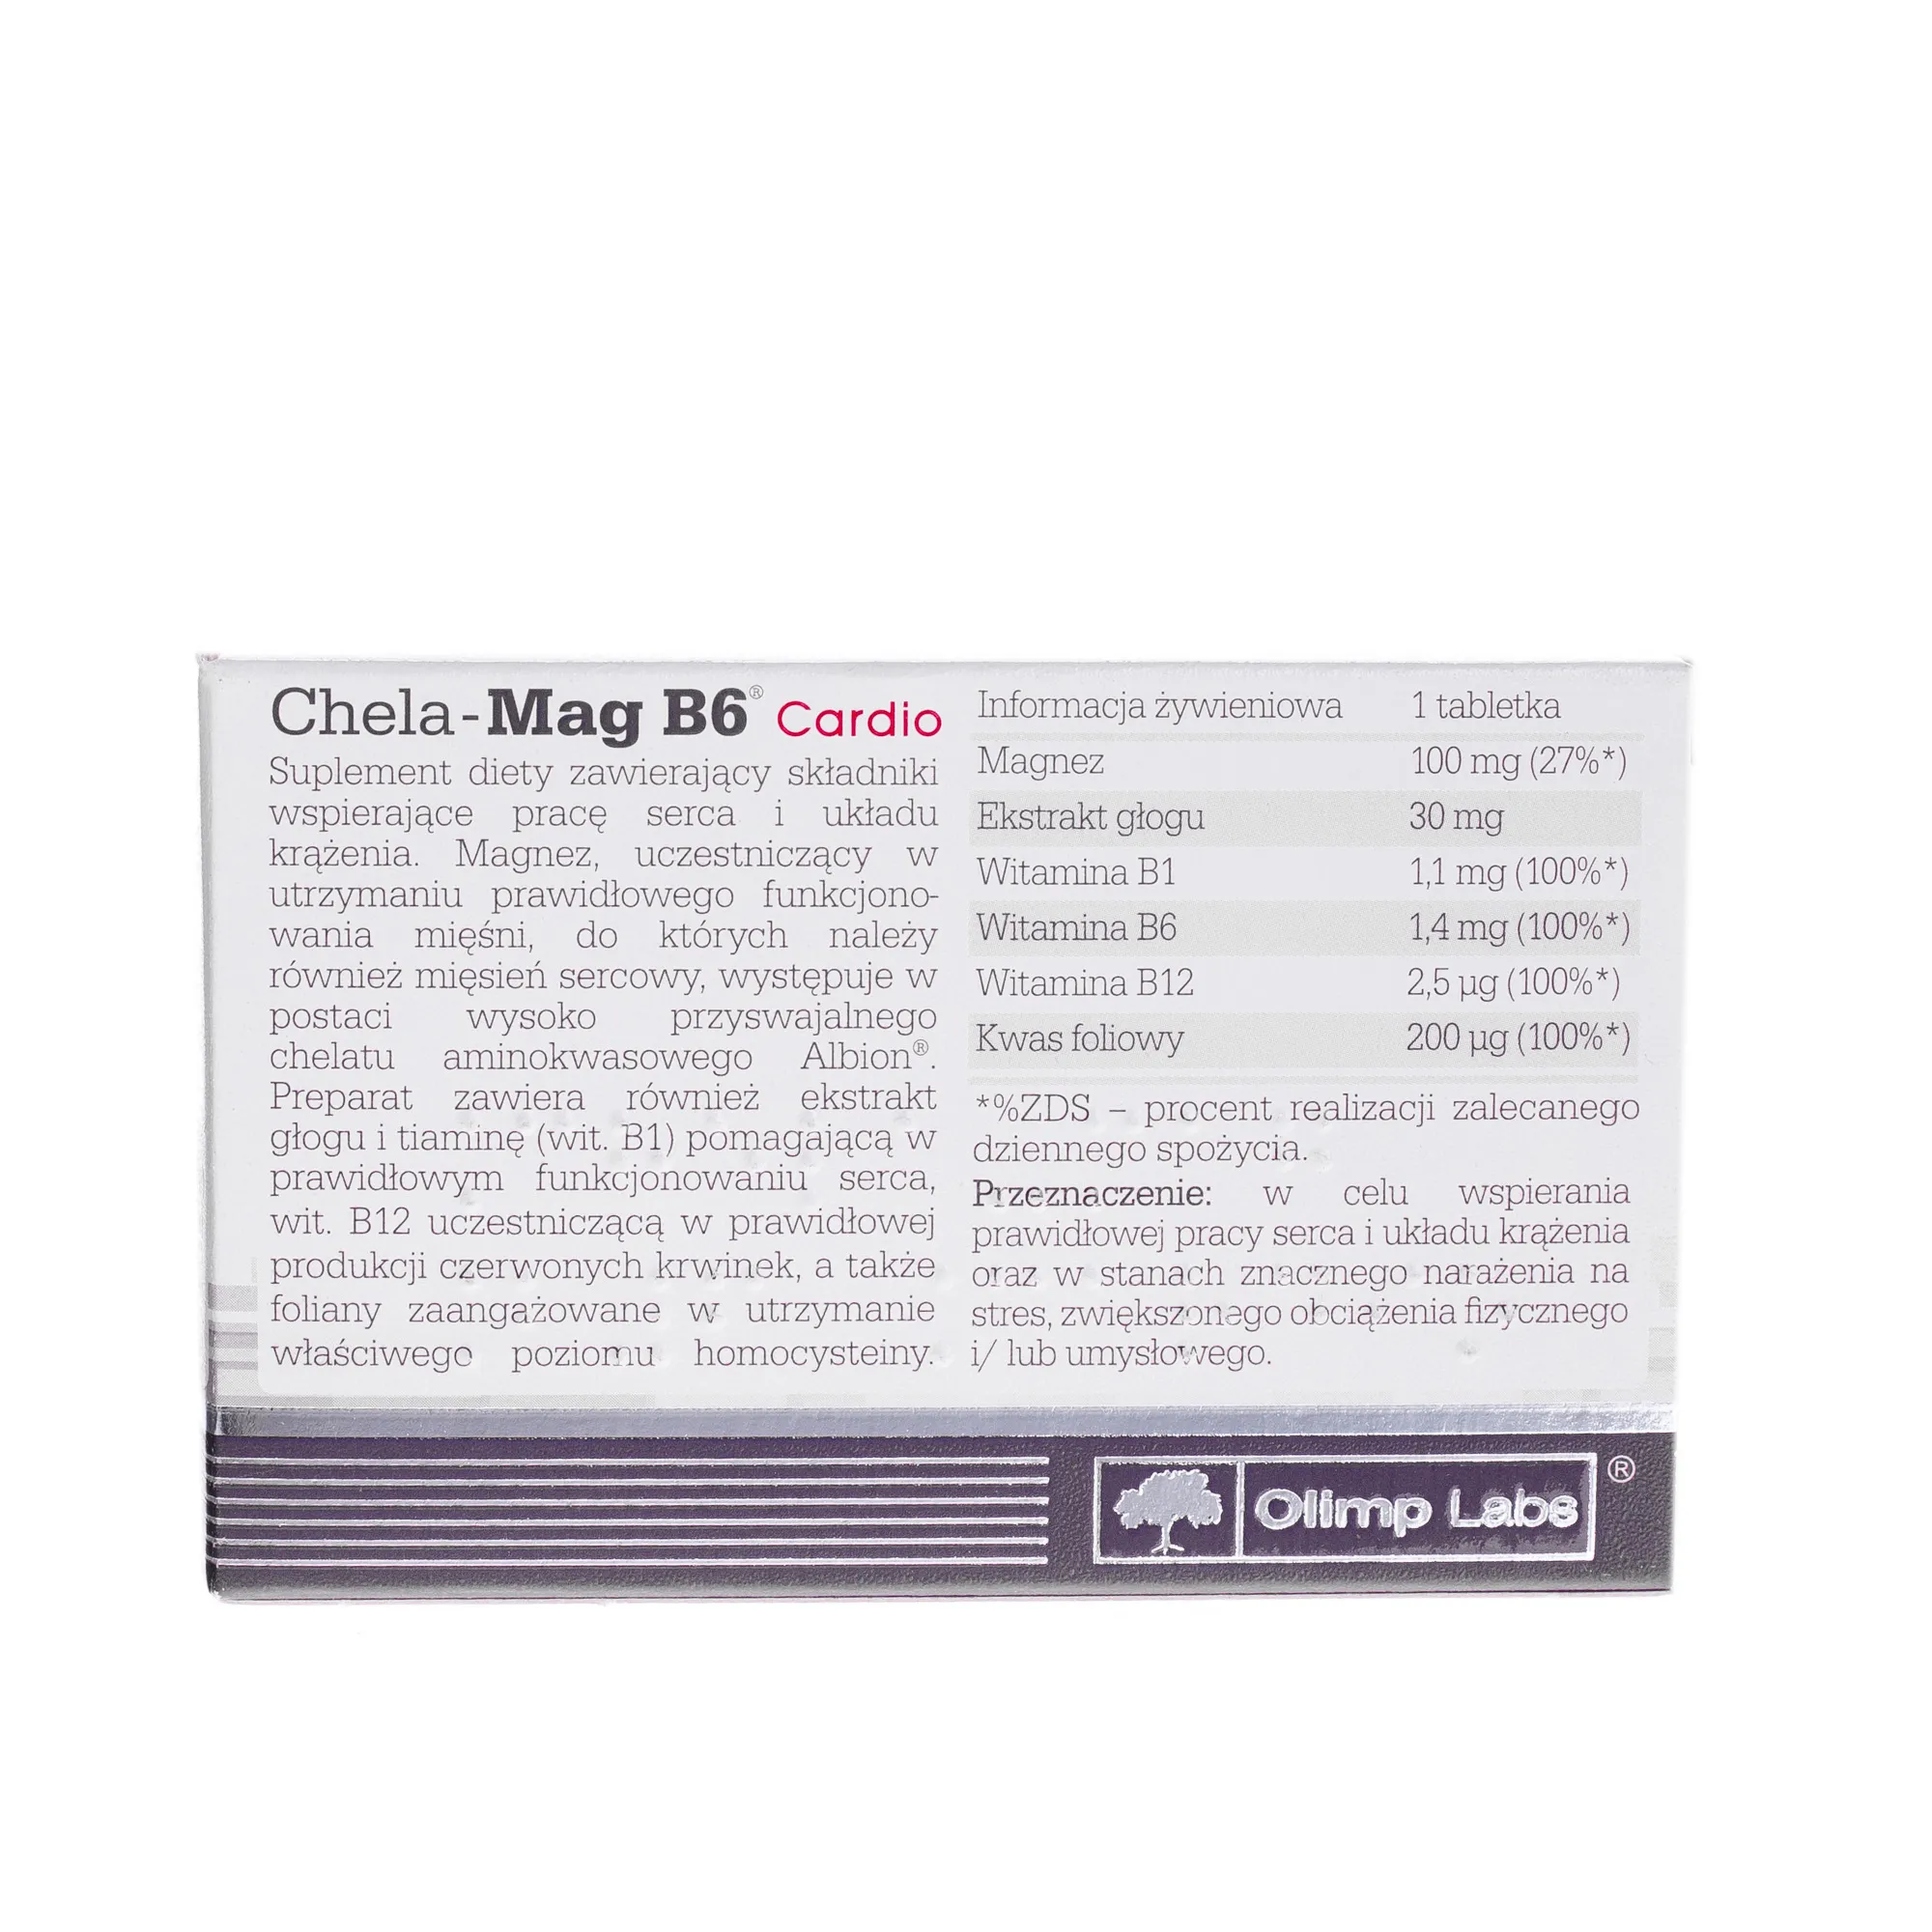 Olimp Chela-Mag B6 Cardio, suplement diety, 30 tabletek powlekanych 